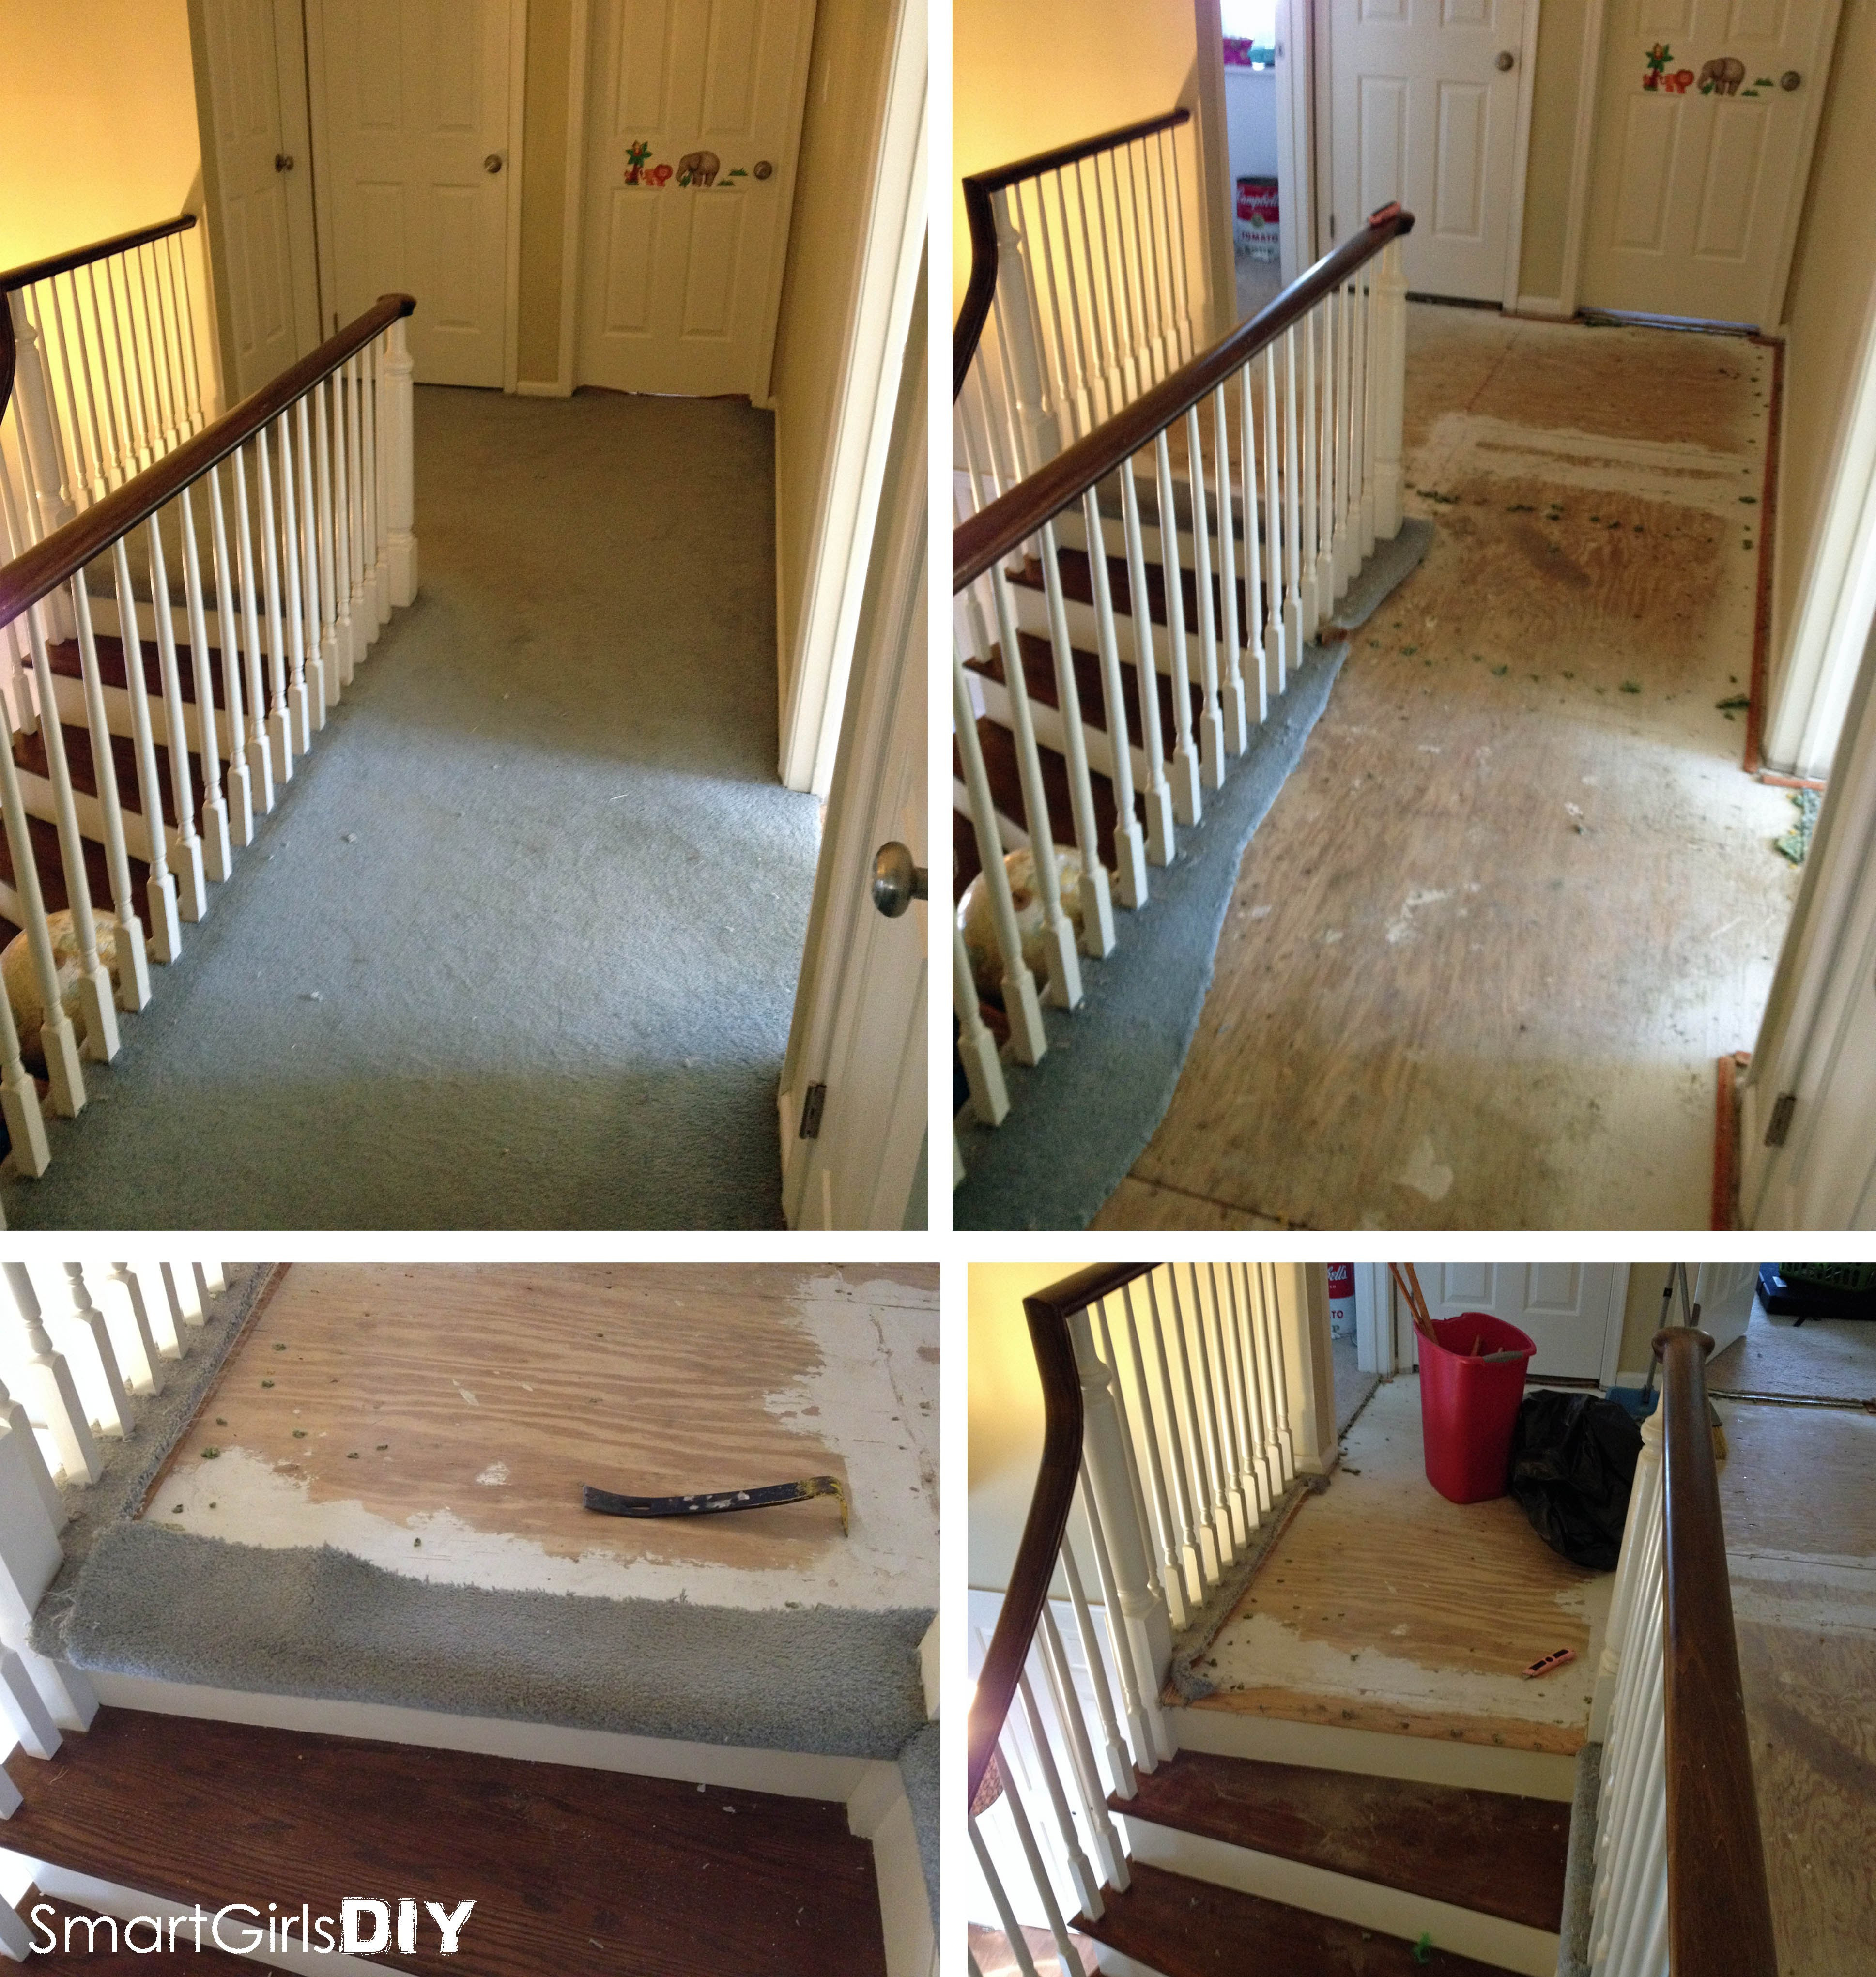 how to install hardwood floors video of upstairs hallway 1 installing hardwood floors inside removing carpet from hallway installing the hardwood floor